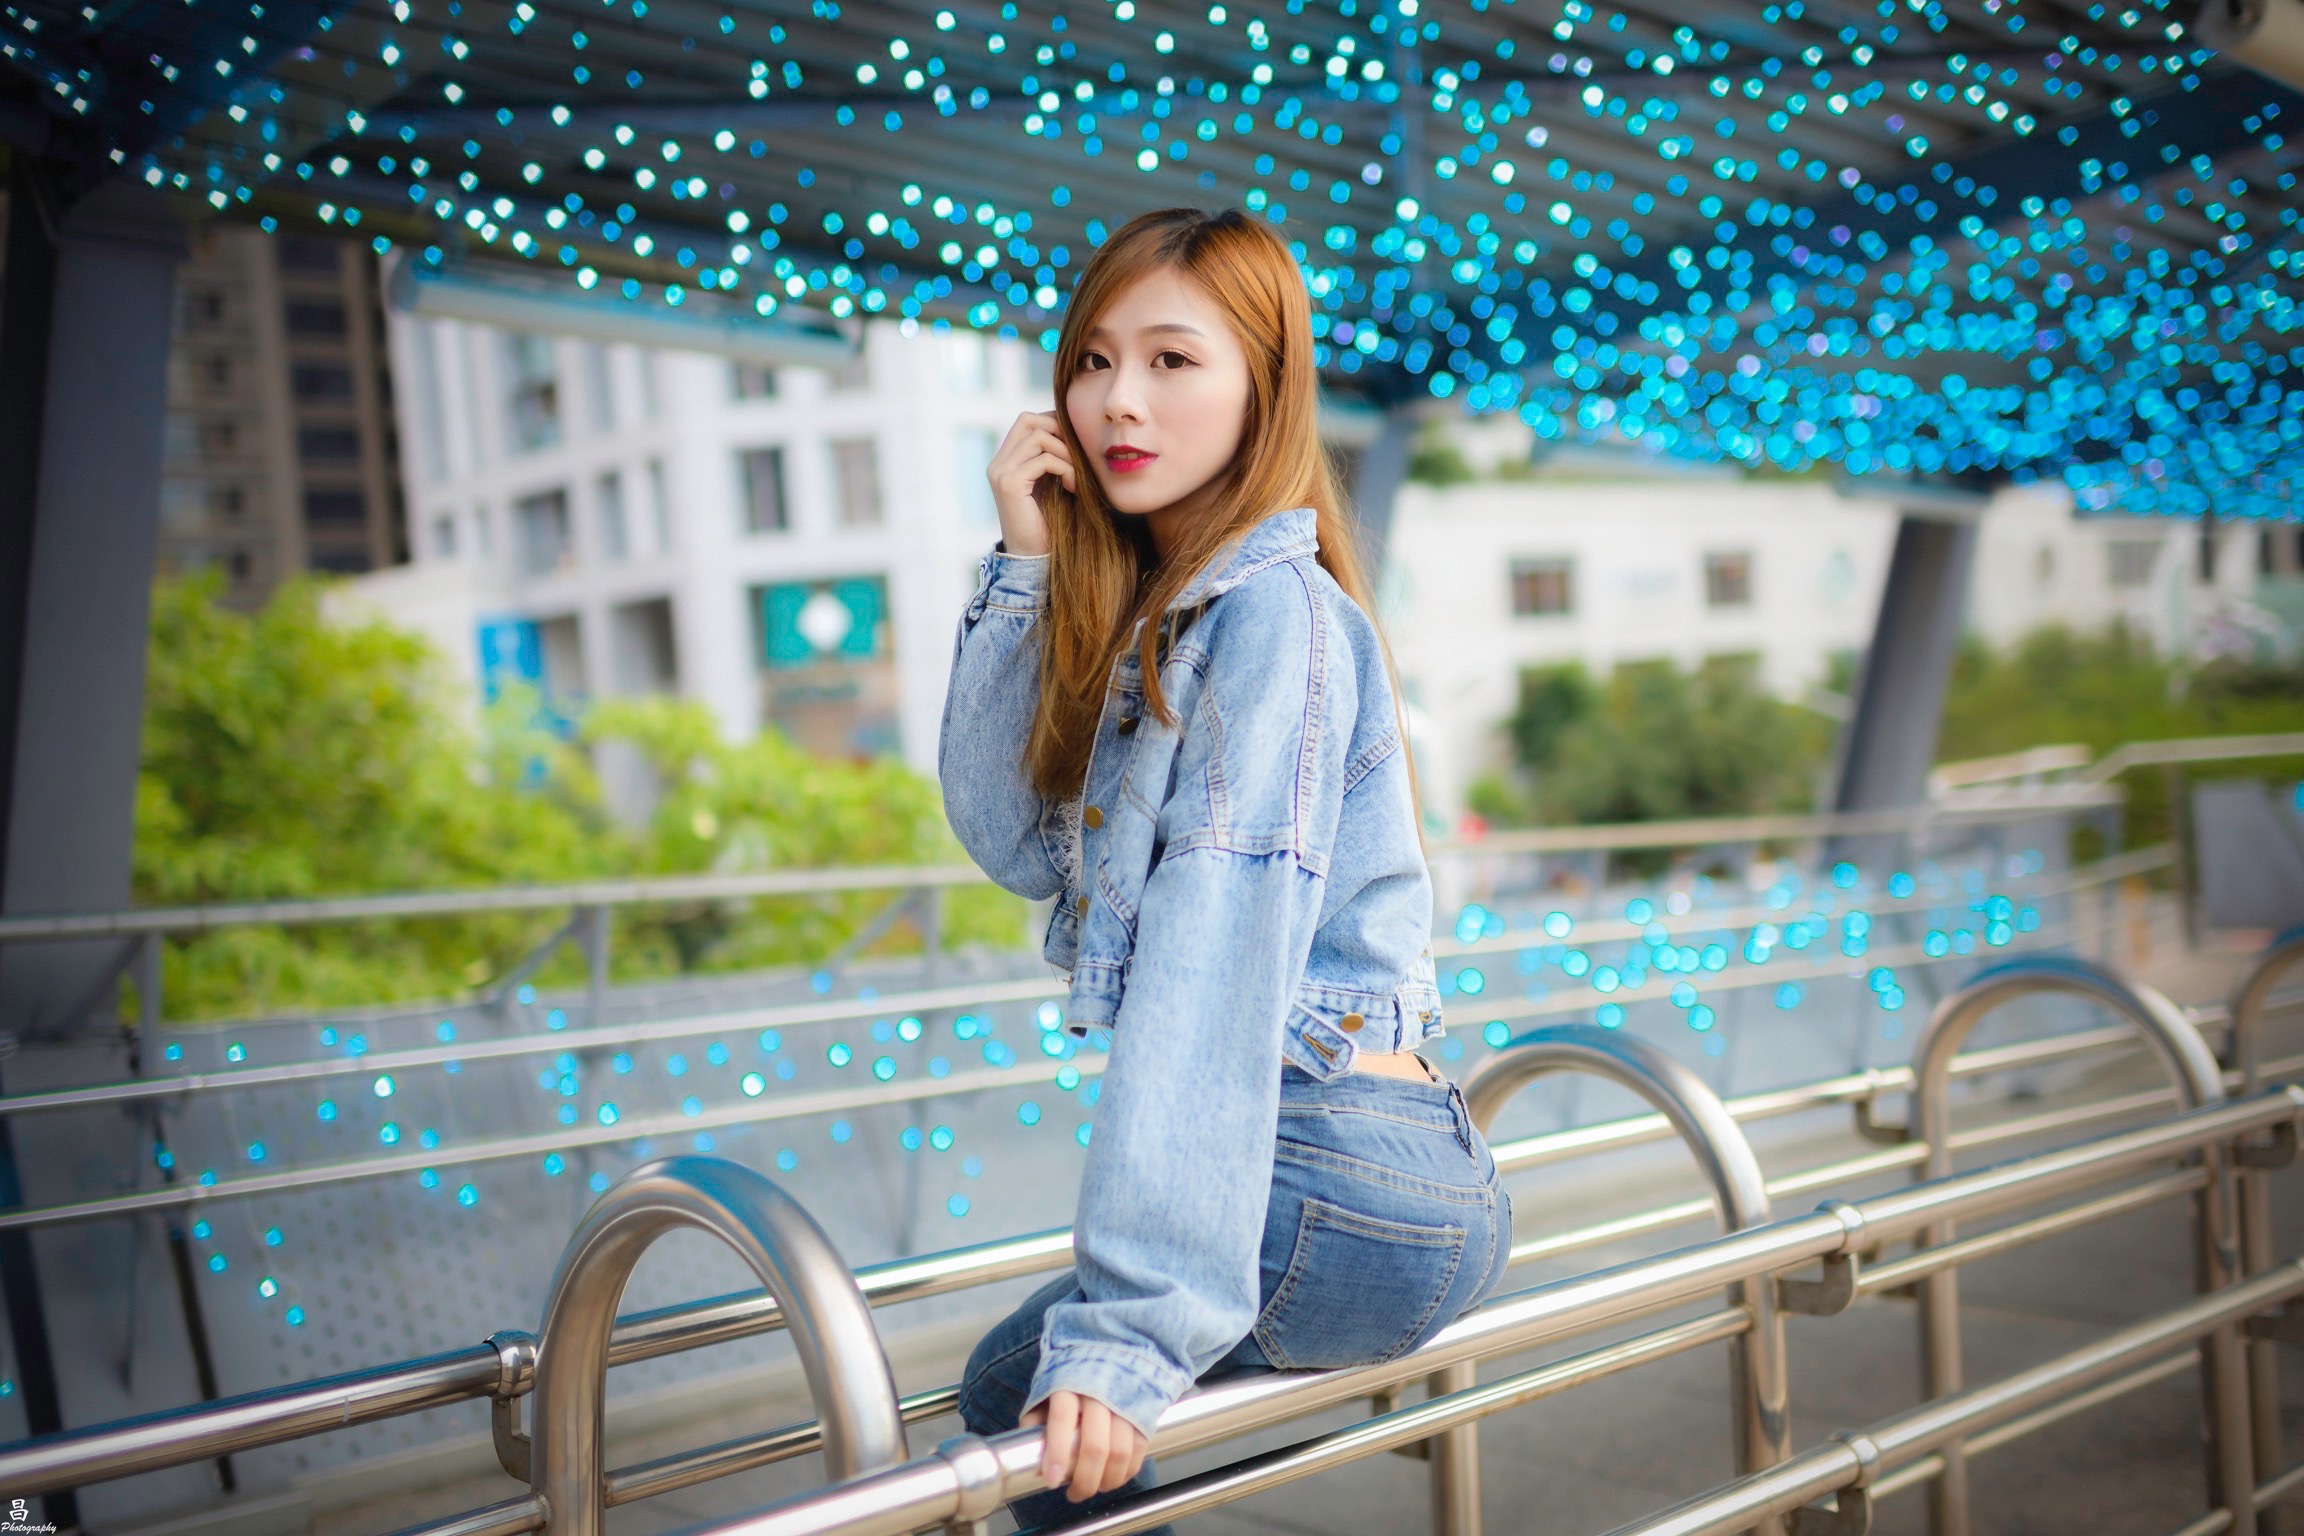 Asian Model Women Long Hair Brunette Jeans Jacket Jeans Sitting Railings Bushes LEDs Depth Of Field  2304x1536